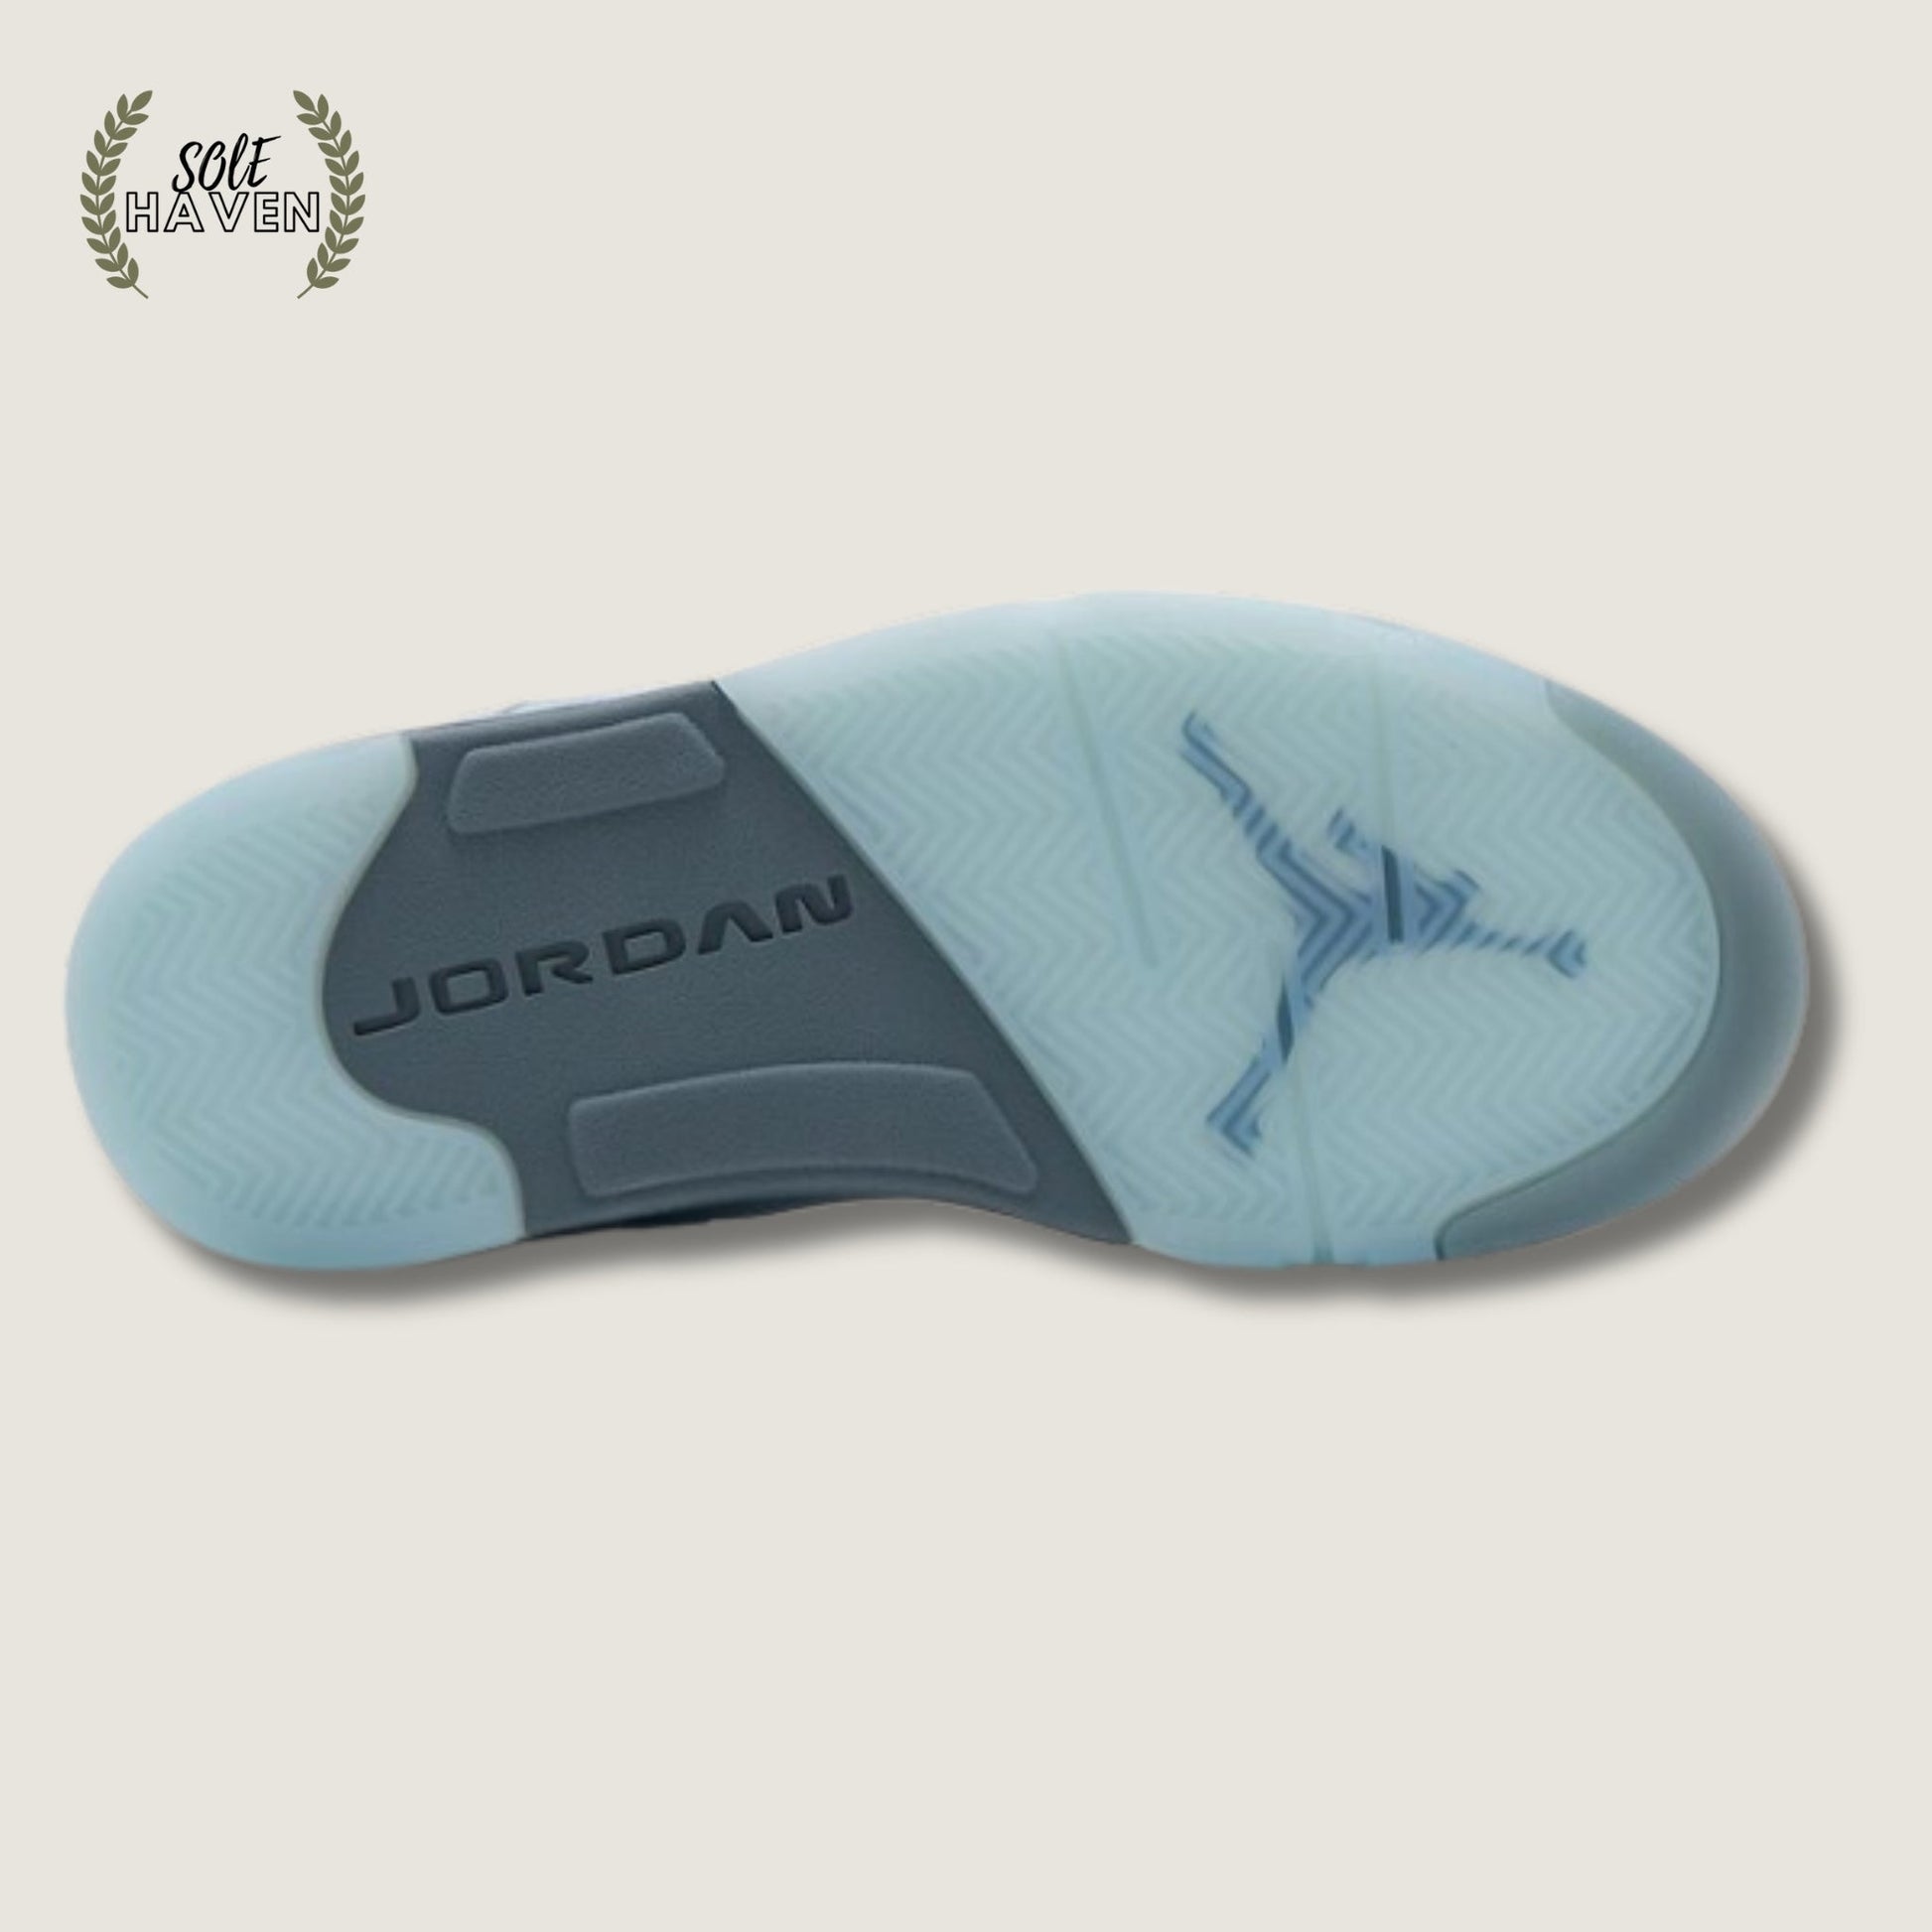 Air Jordan 5 Retro 'Blue Bird' - Sole HavenShoesJordan